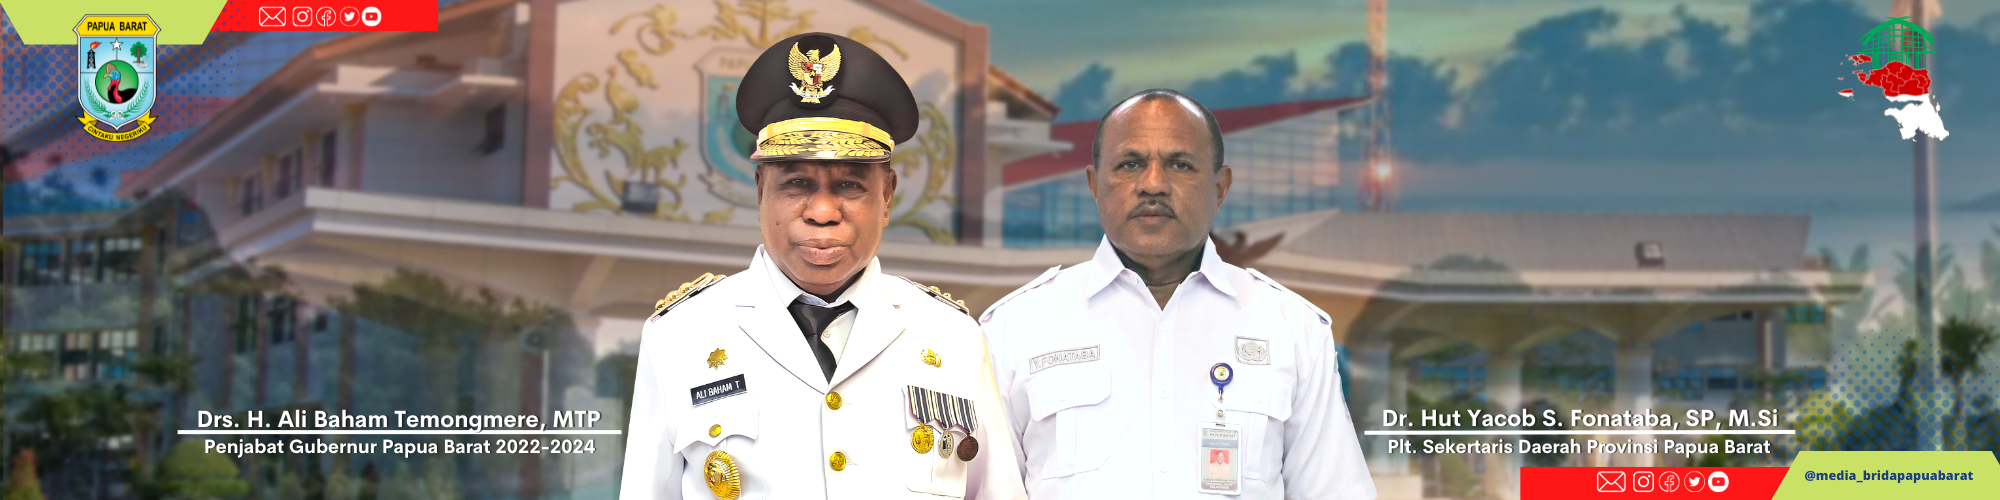 PJ Gubernur Papua Barat